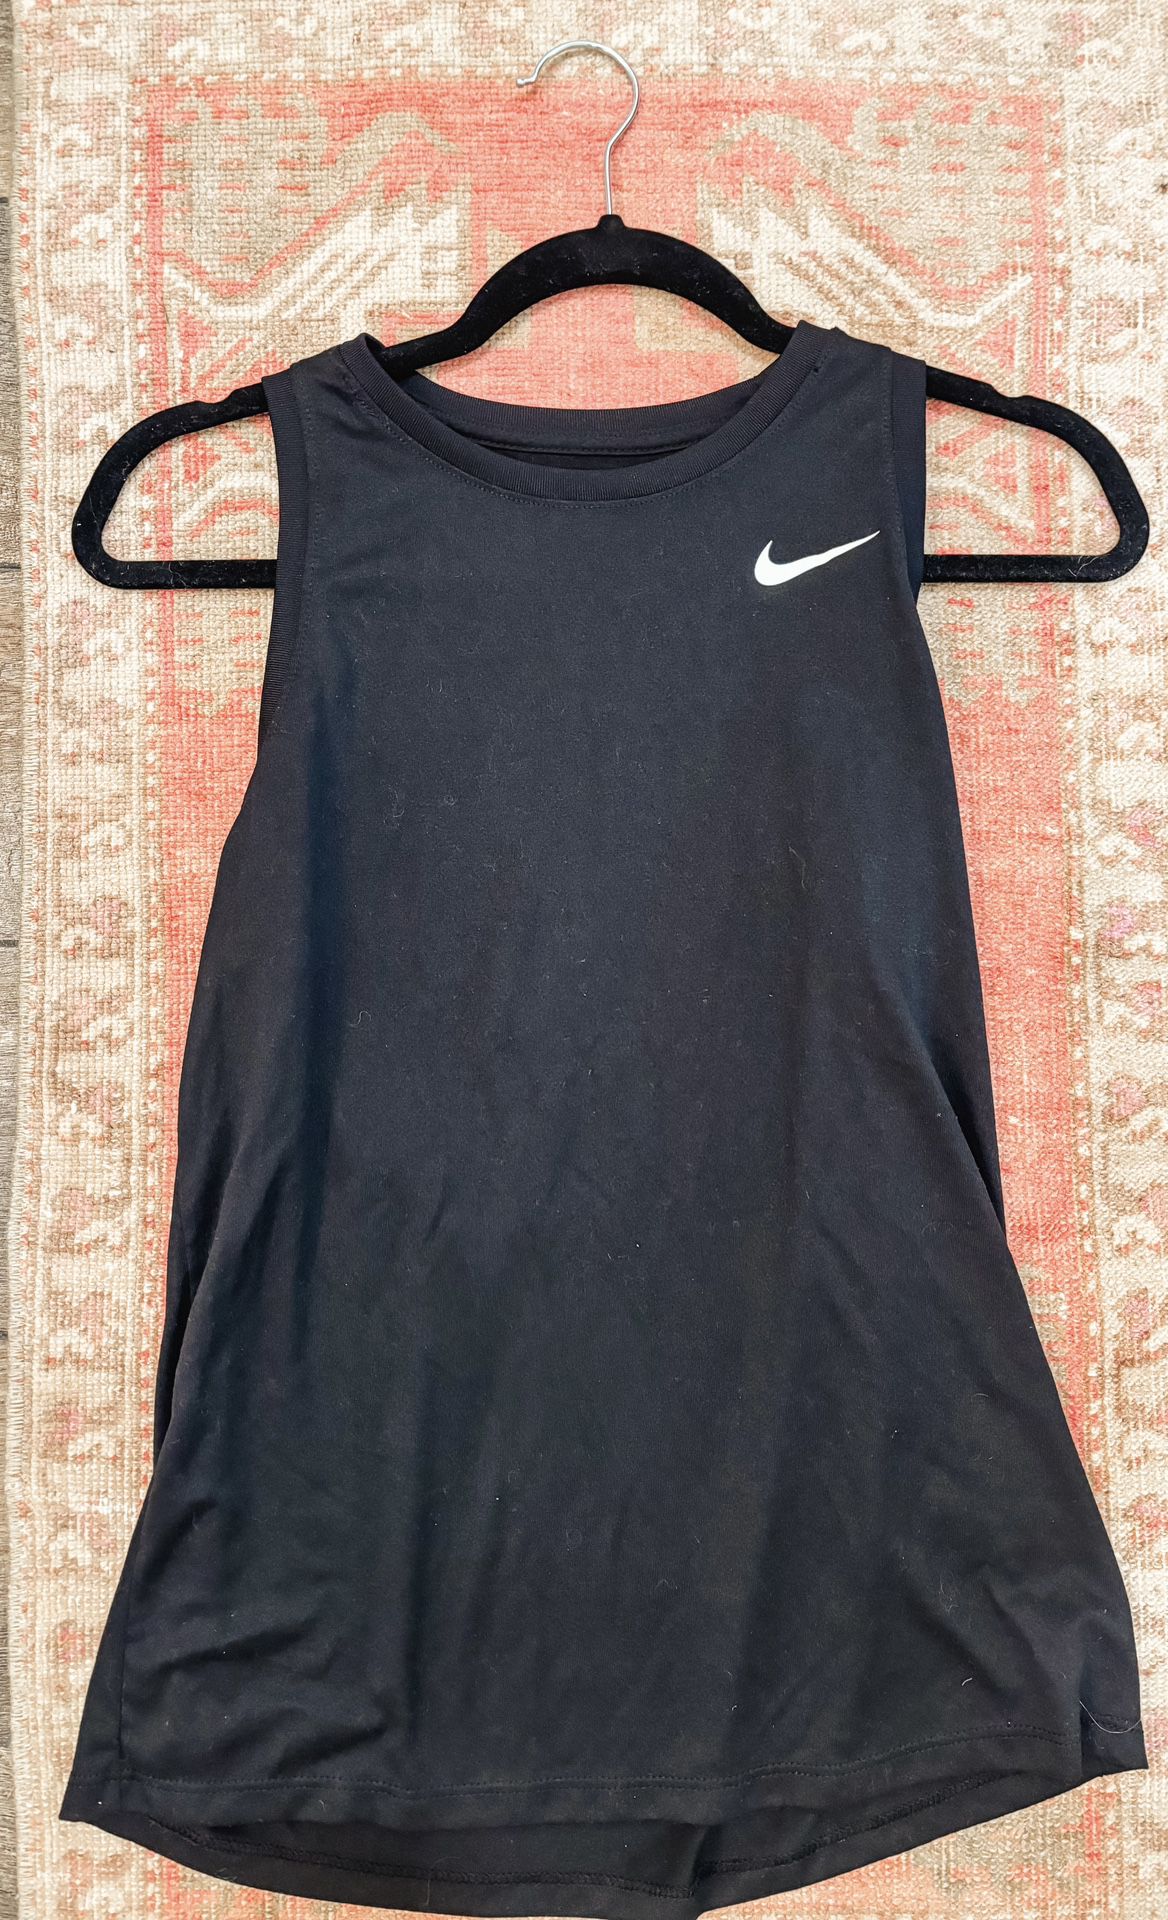 Women's Nike DRI FIT - Workout Shirt Sleeveless - Black